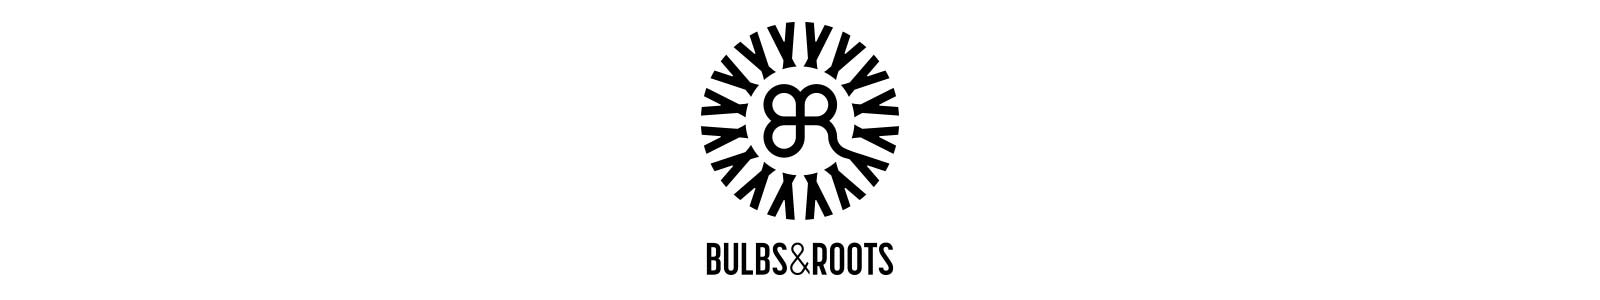 Bulbs & Roots